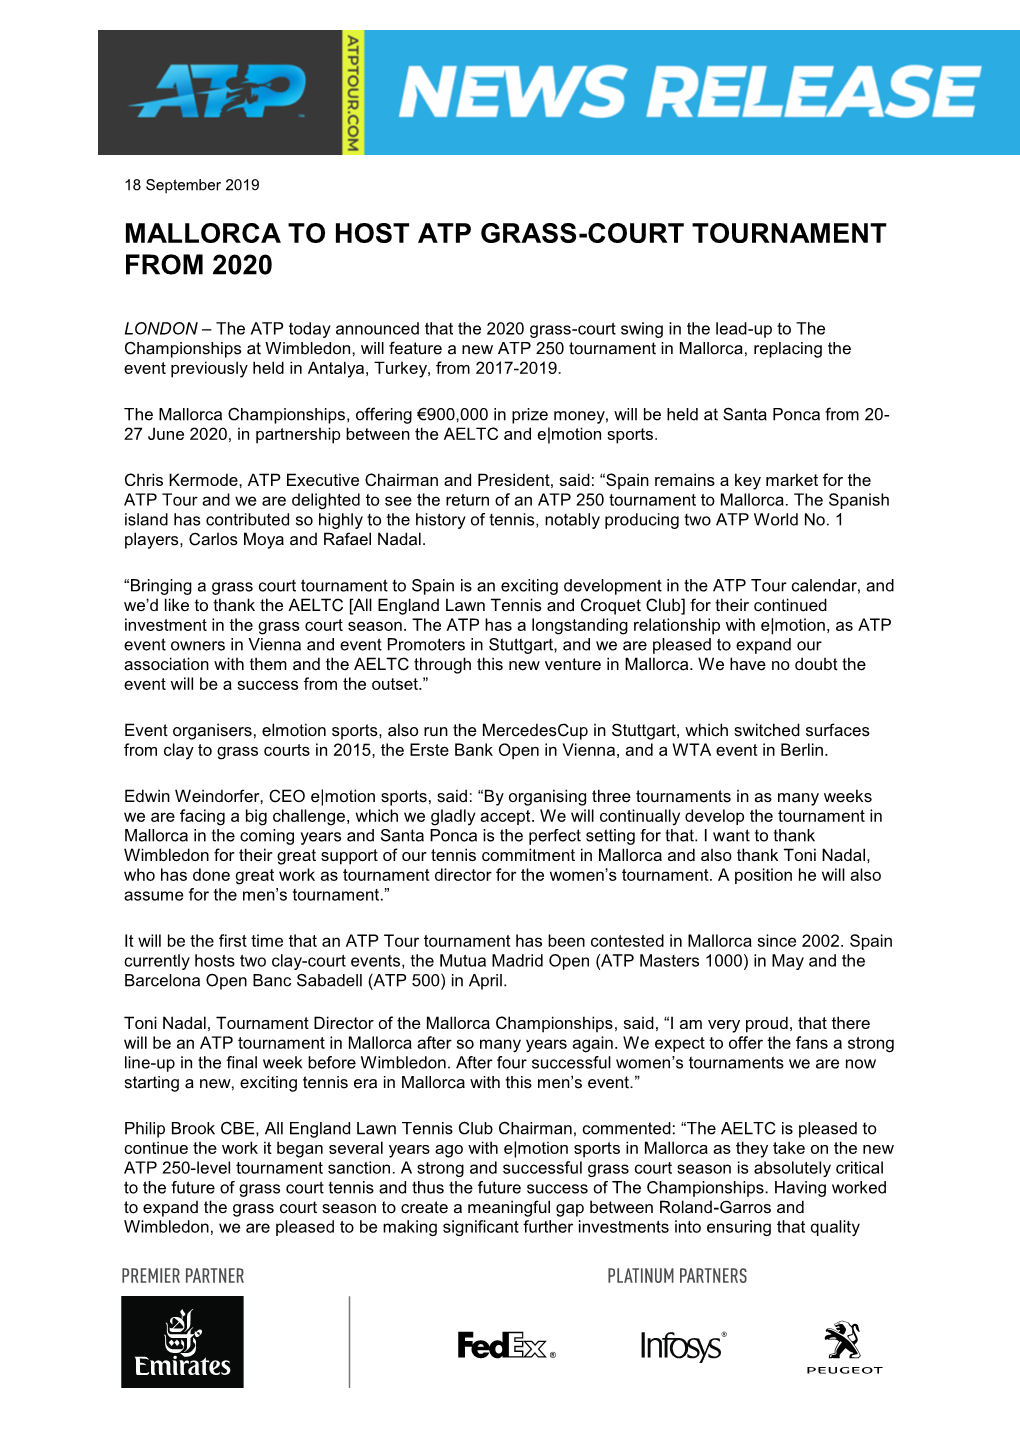 Mallorca to Host Atp Grass-Court Tournament from 2020